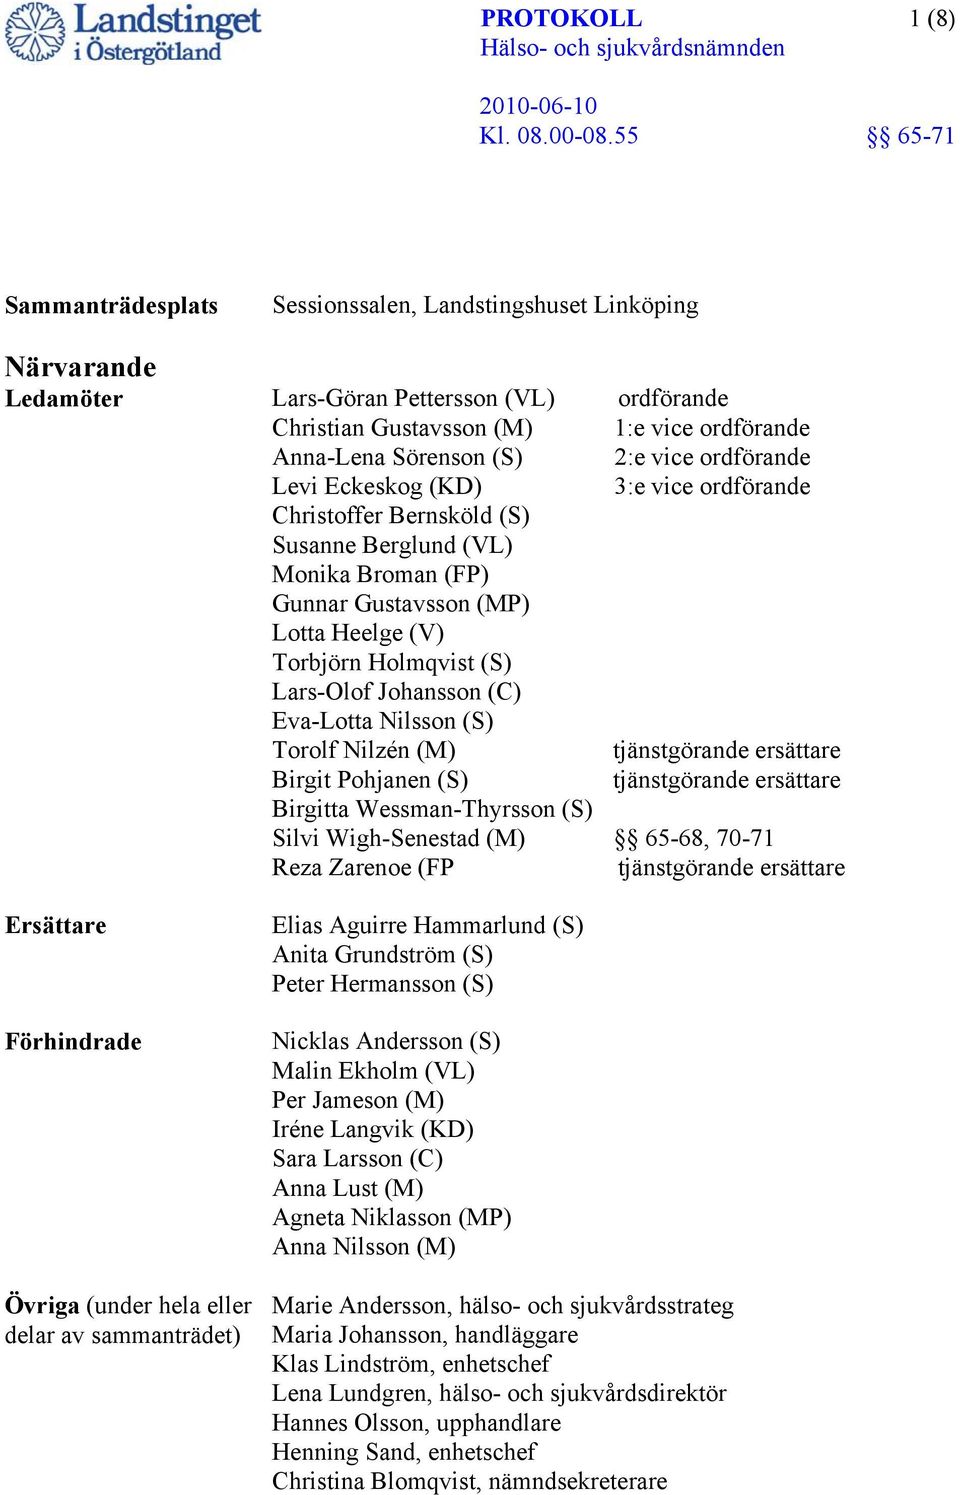 Johansson (C) Eva-Lotta Nilsson (S) Torolf Nilzén (M) tjänstgörande ersättare Birgit Pohjanen (S) tjänstgörande ersättare Birgitta Wessman-Thyrsson (S) Silvi Wigh-Senestad (M) 65-68, 70-71 Reza